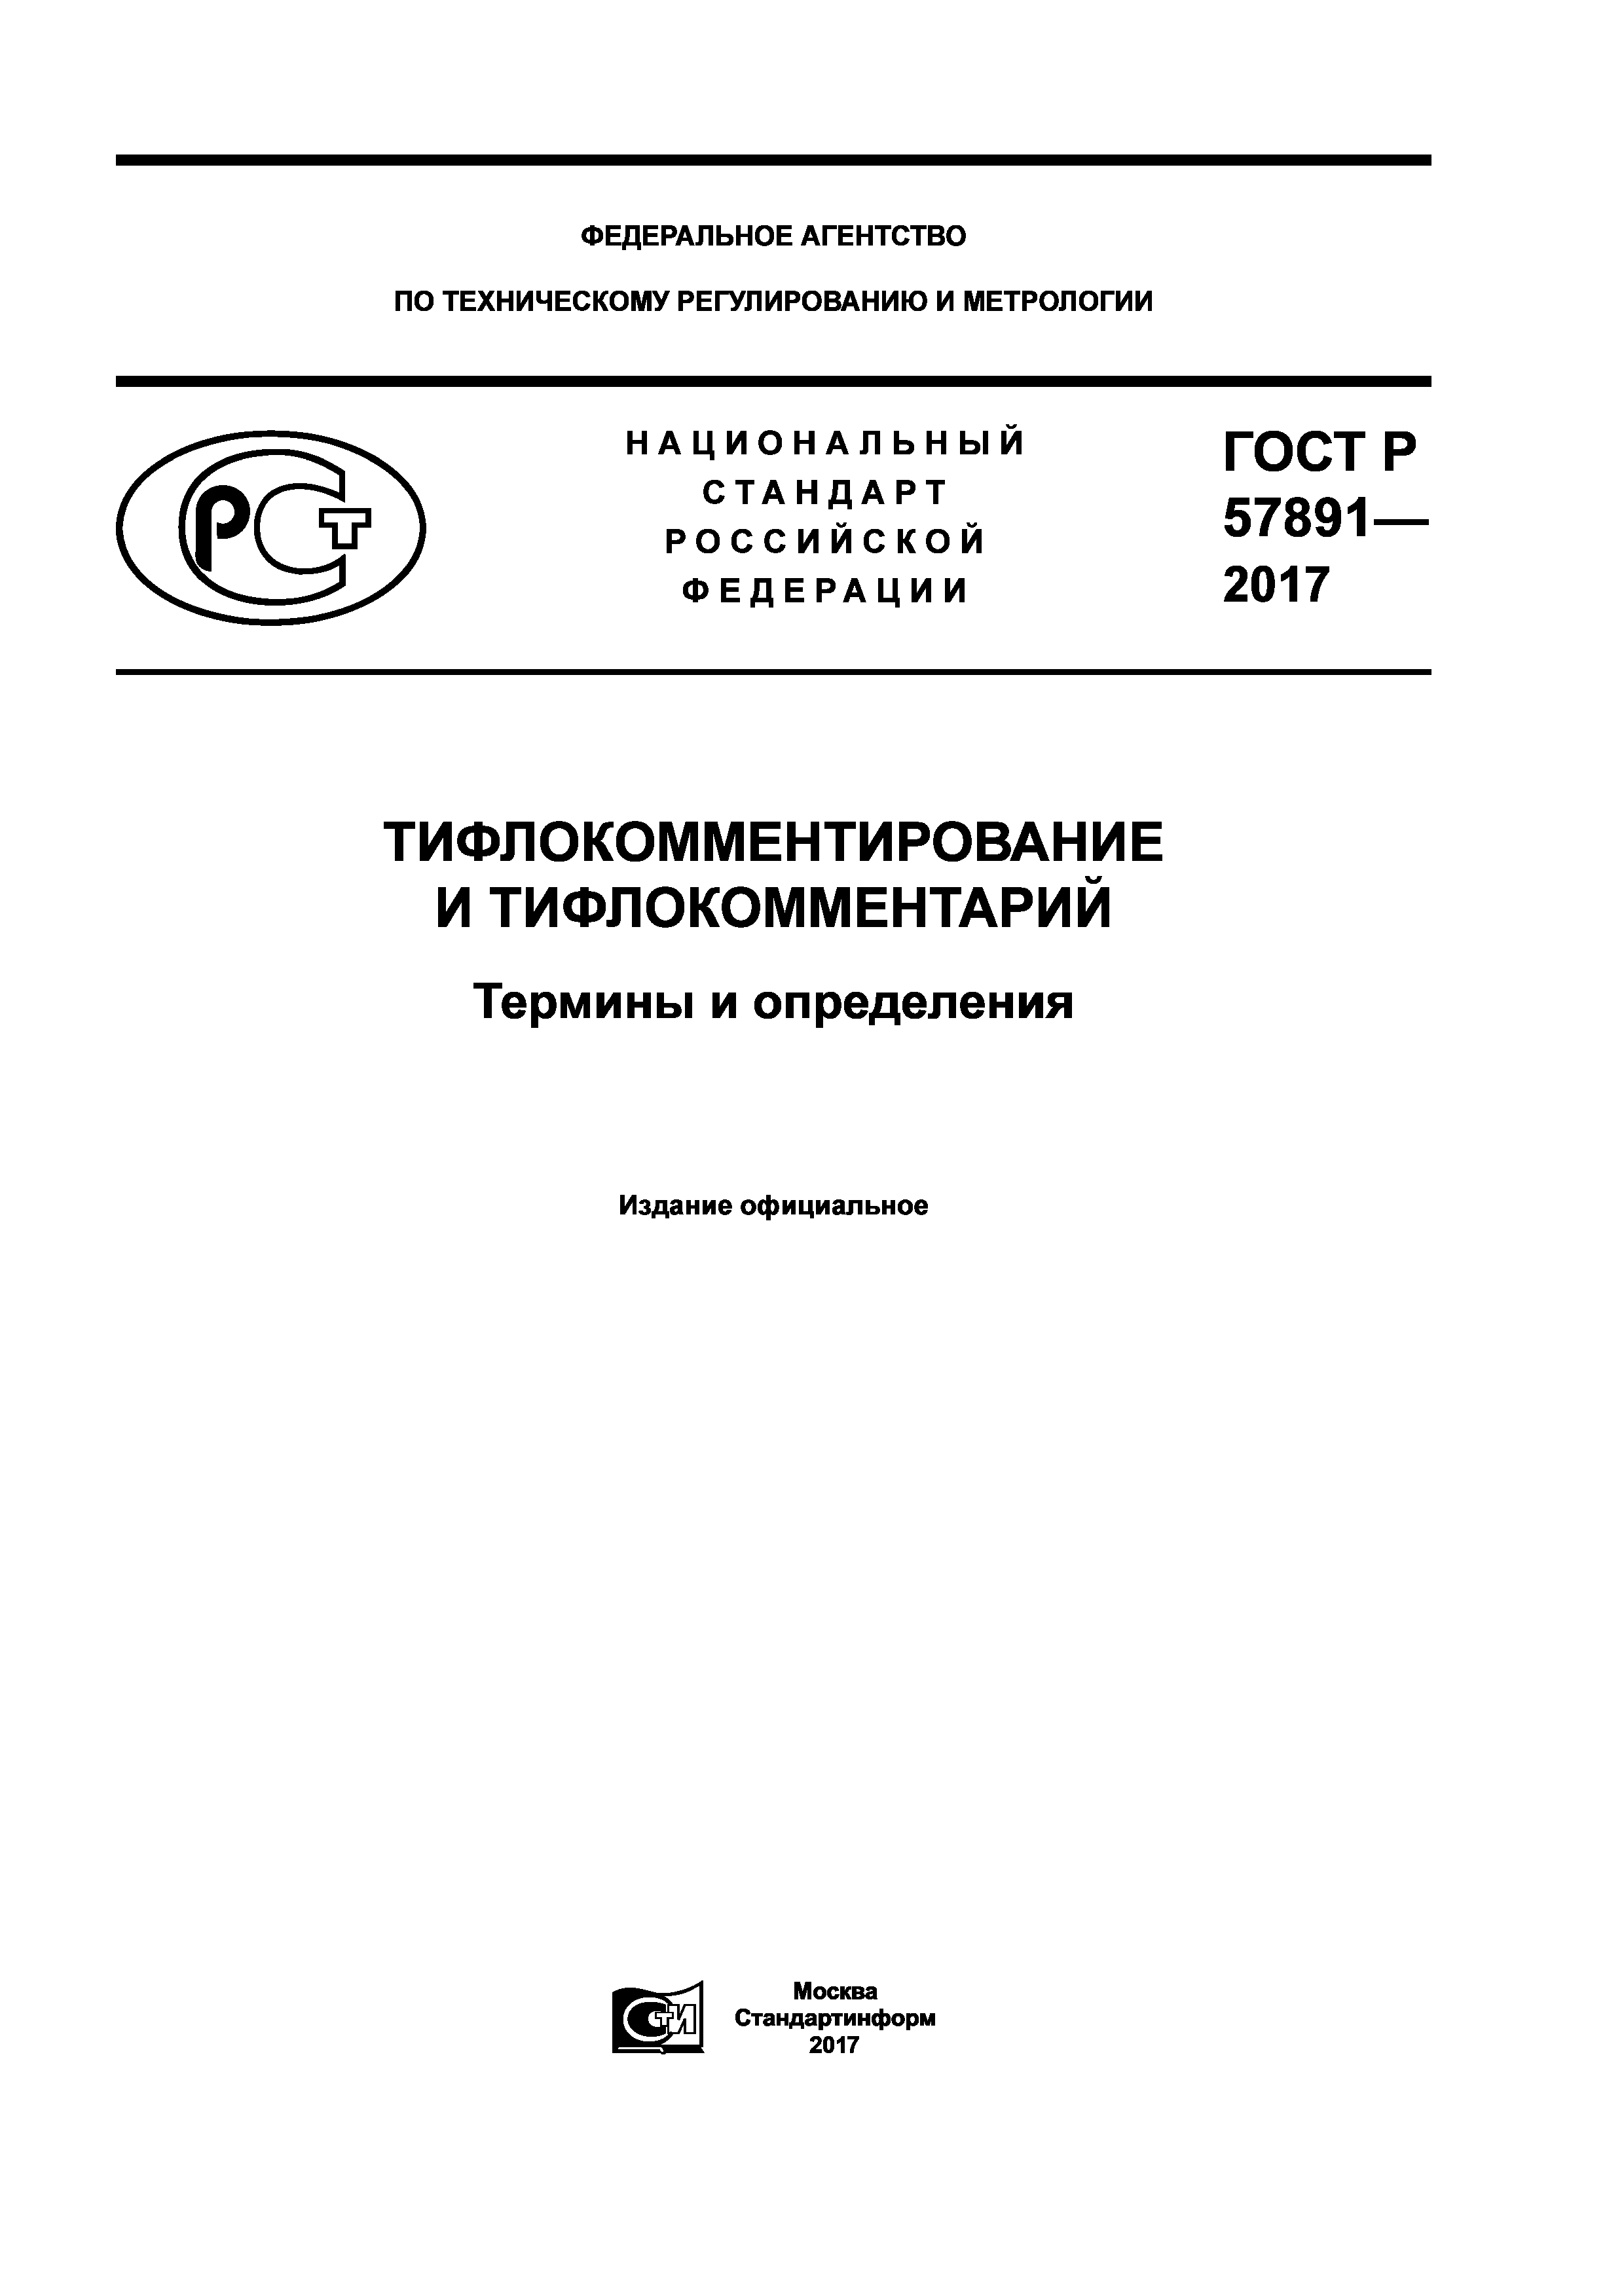 ГОСТ Р 57891-2017